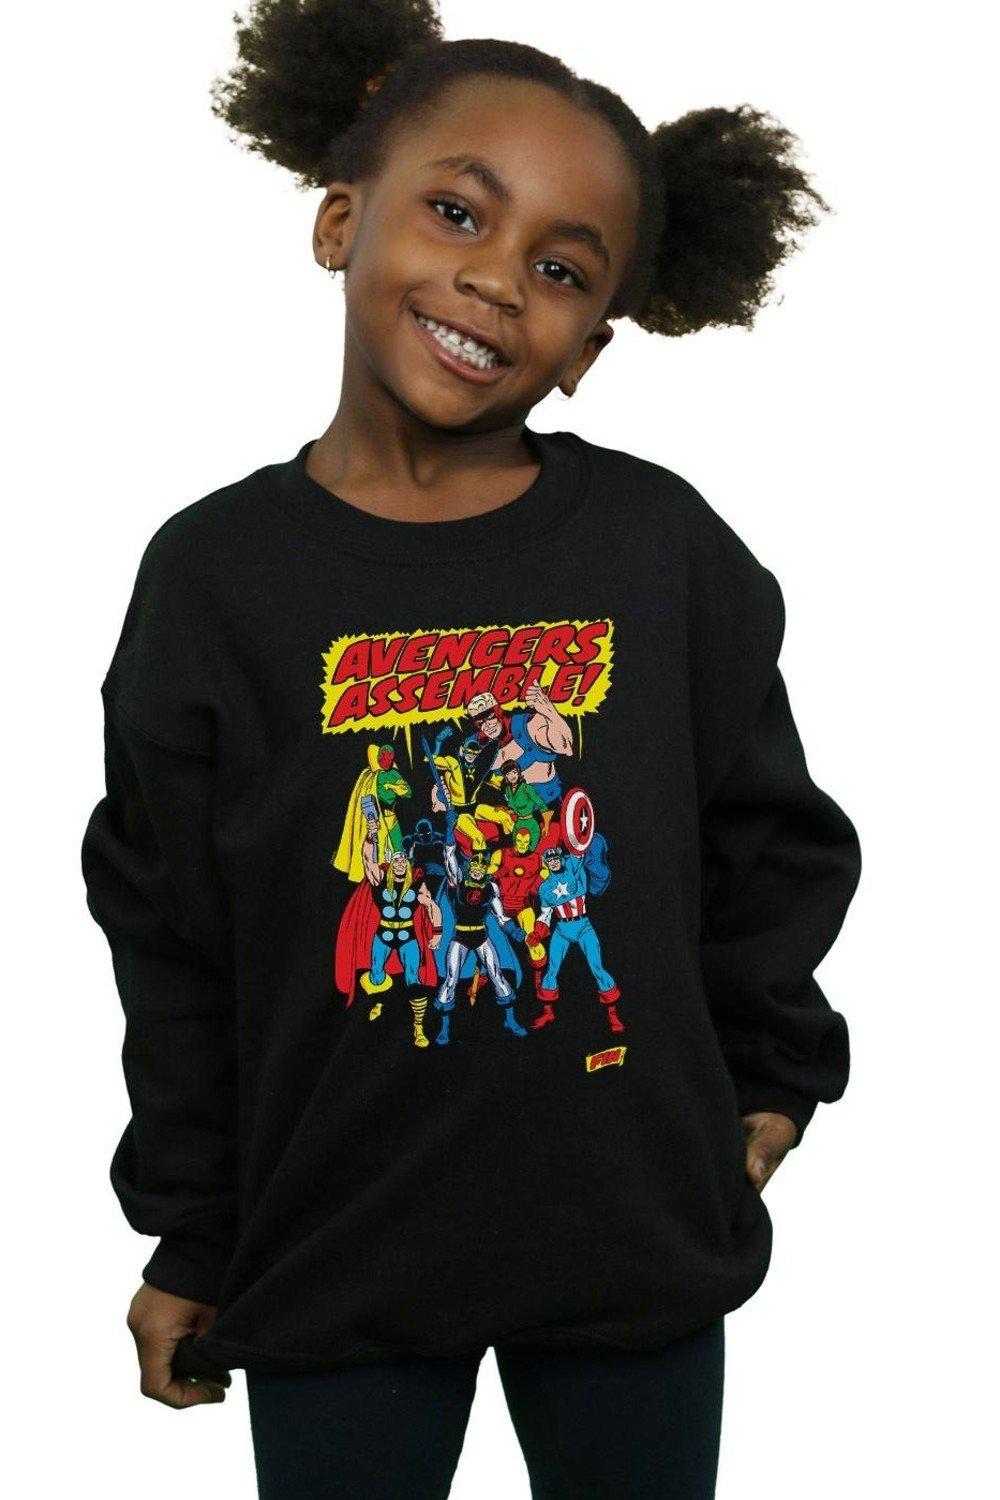 Avengers Assemble Sweatshirt